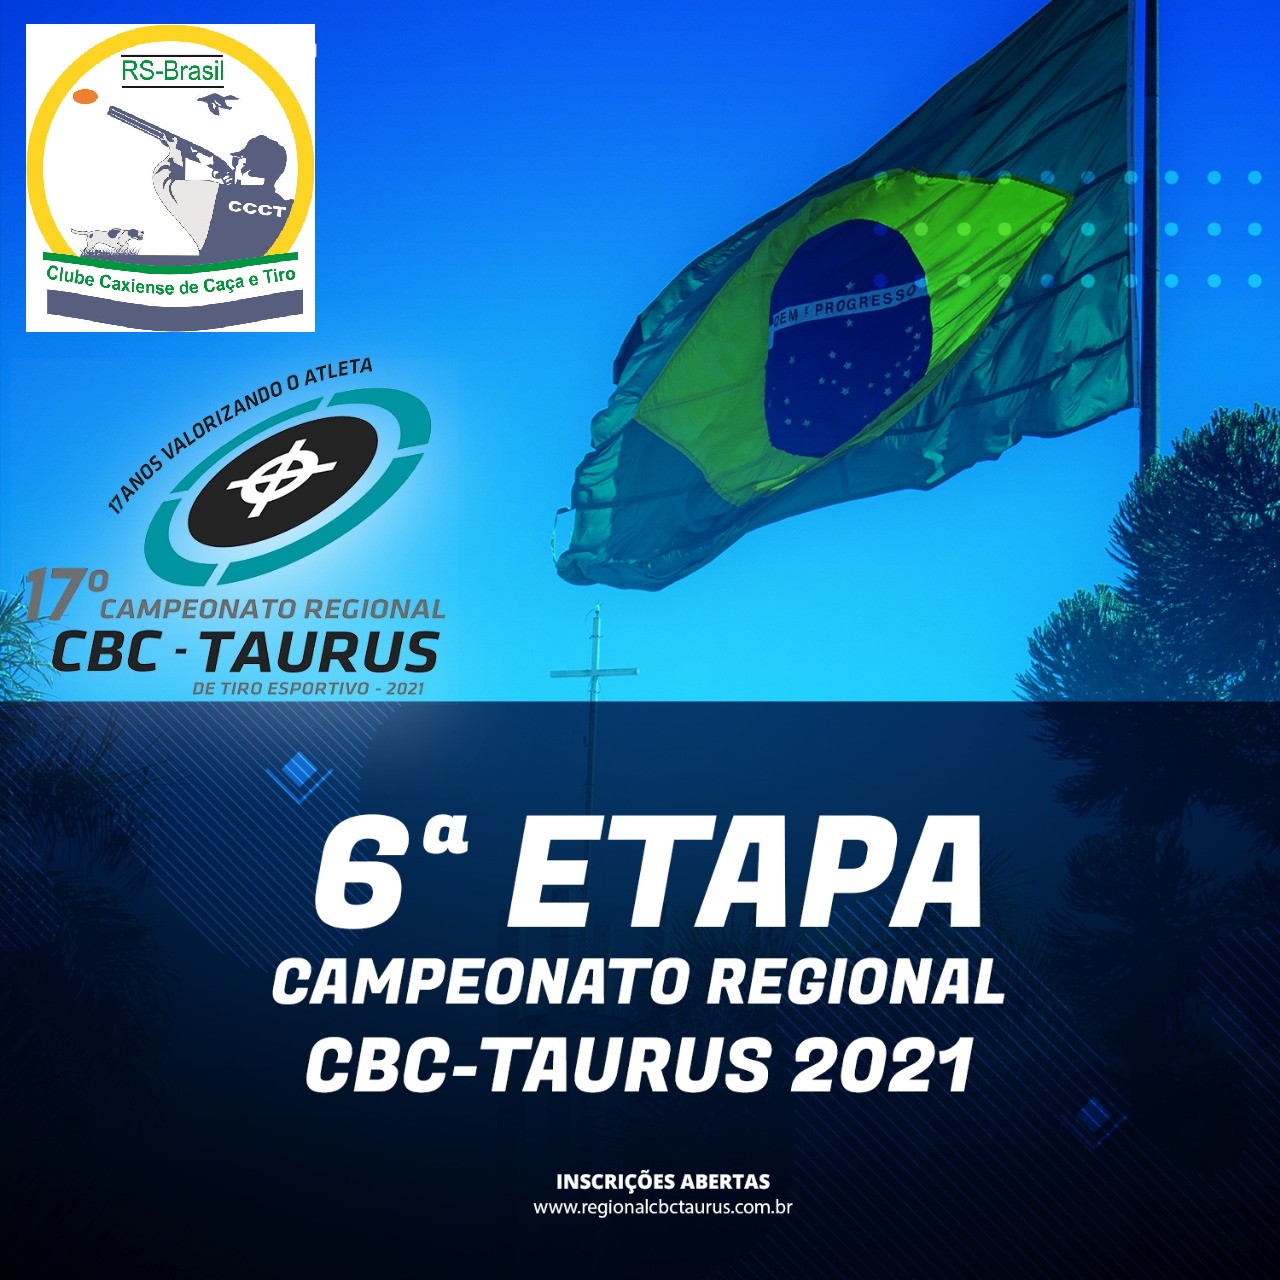 6 etapa Regional CBC Taurus 2021 logo CCCT